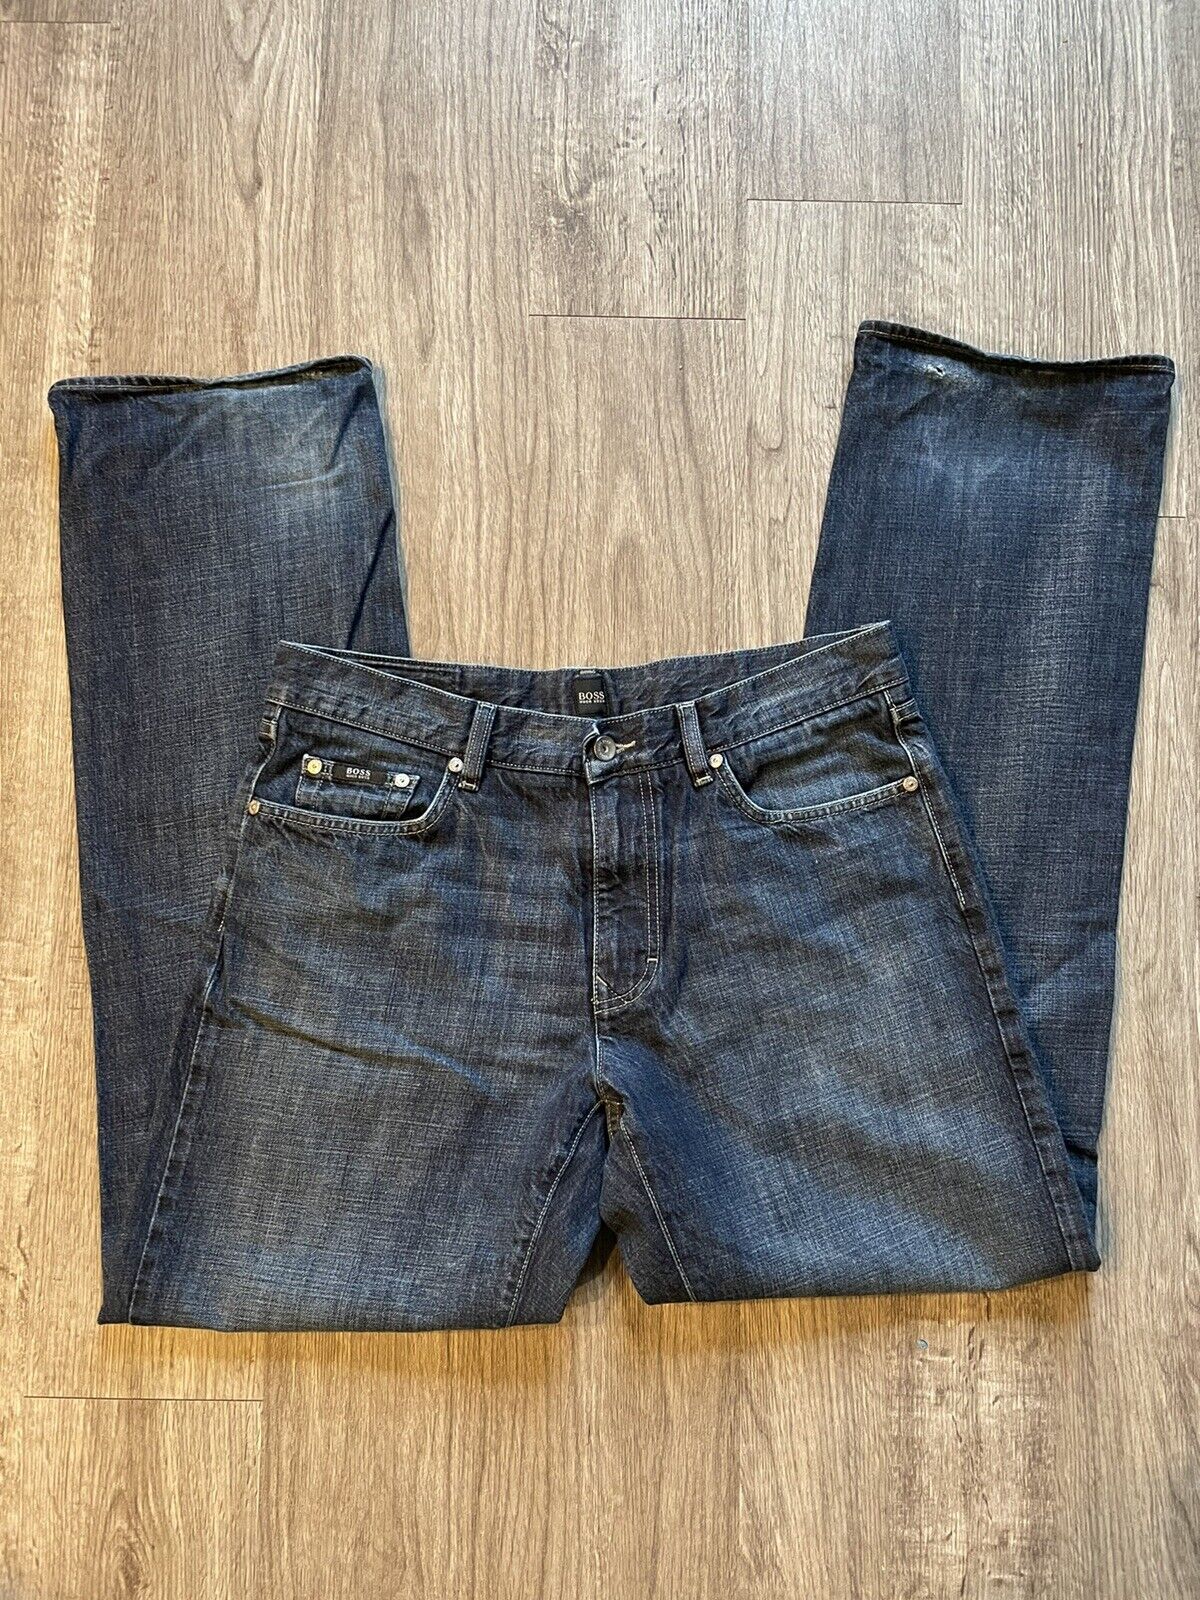 Dem visdom utilsigtet Hugo Boss kansas regular fit stretch jeans 34/32 *FLAW* | eBay